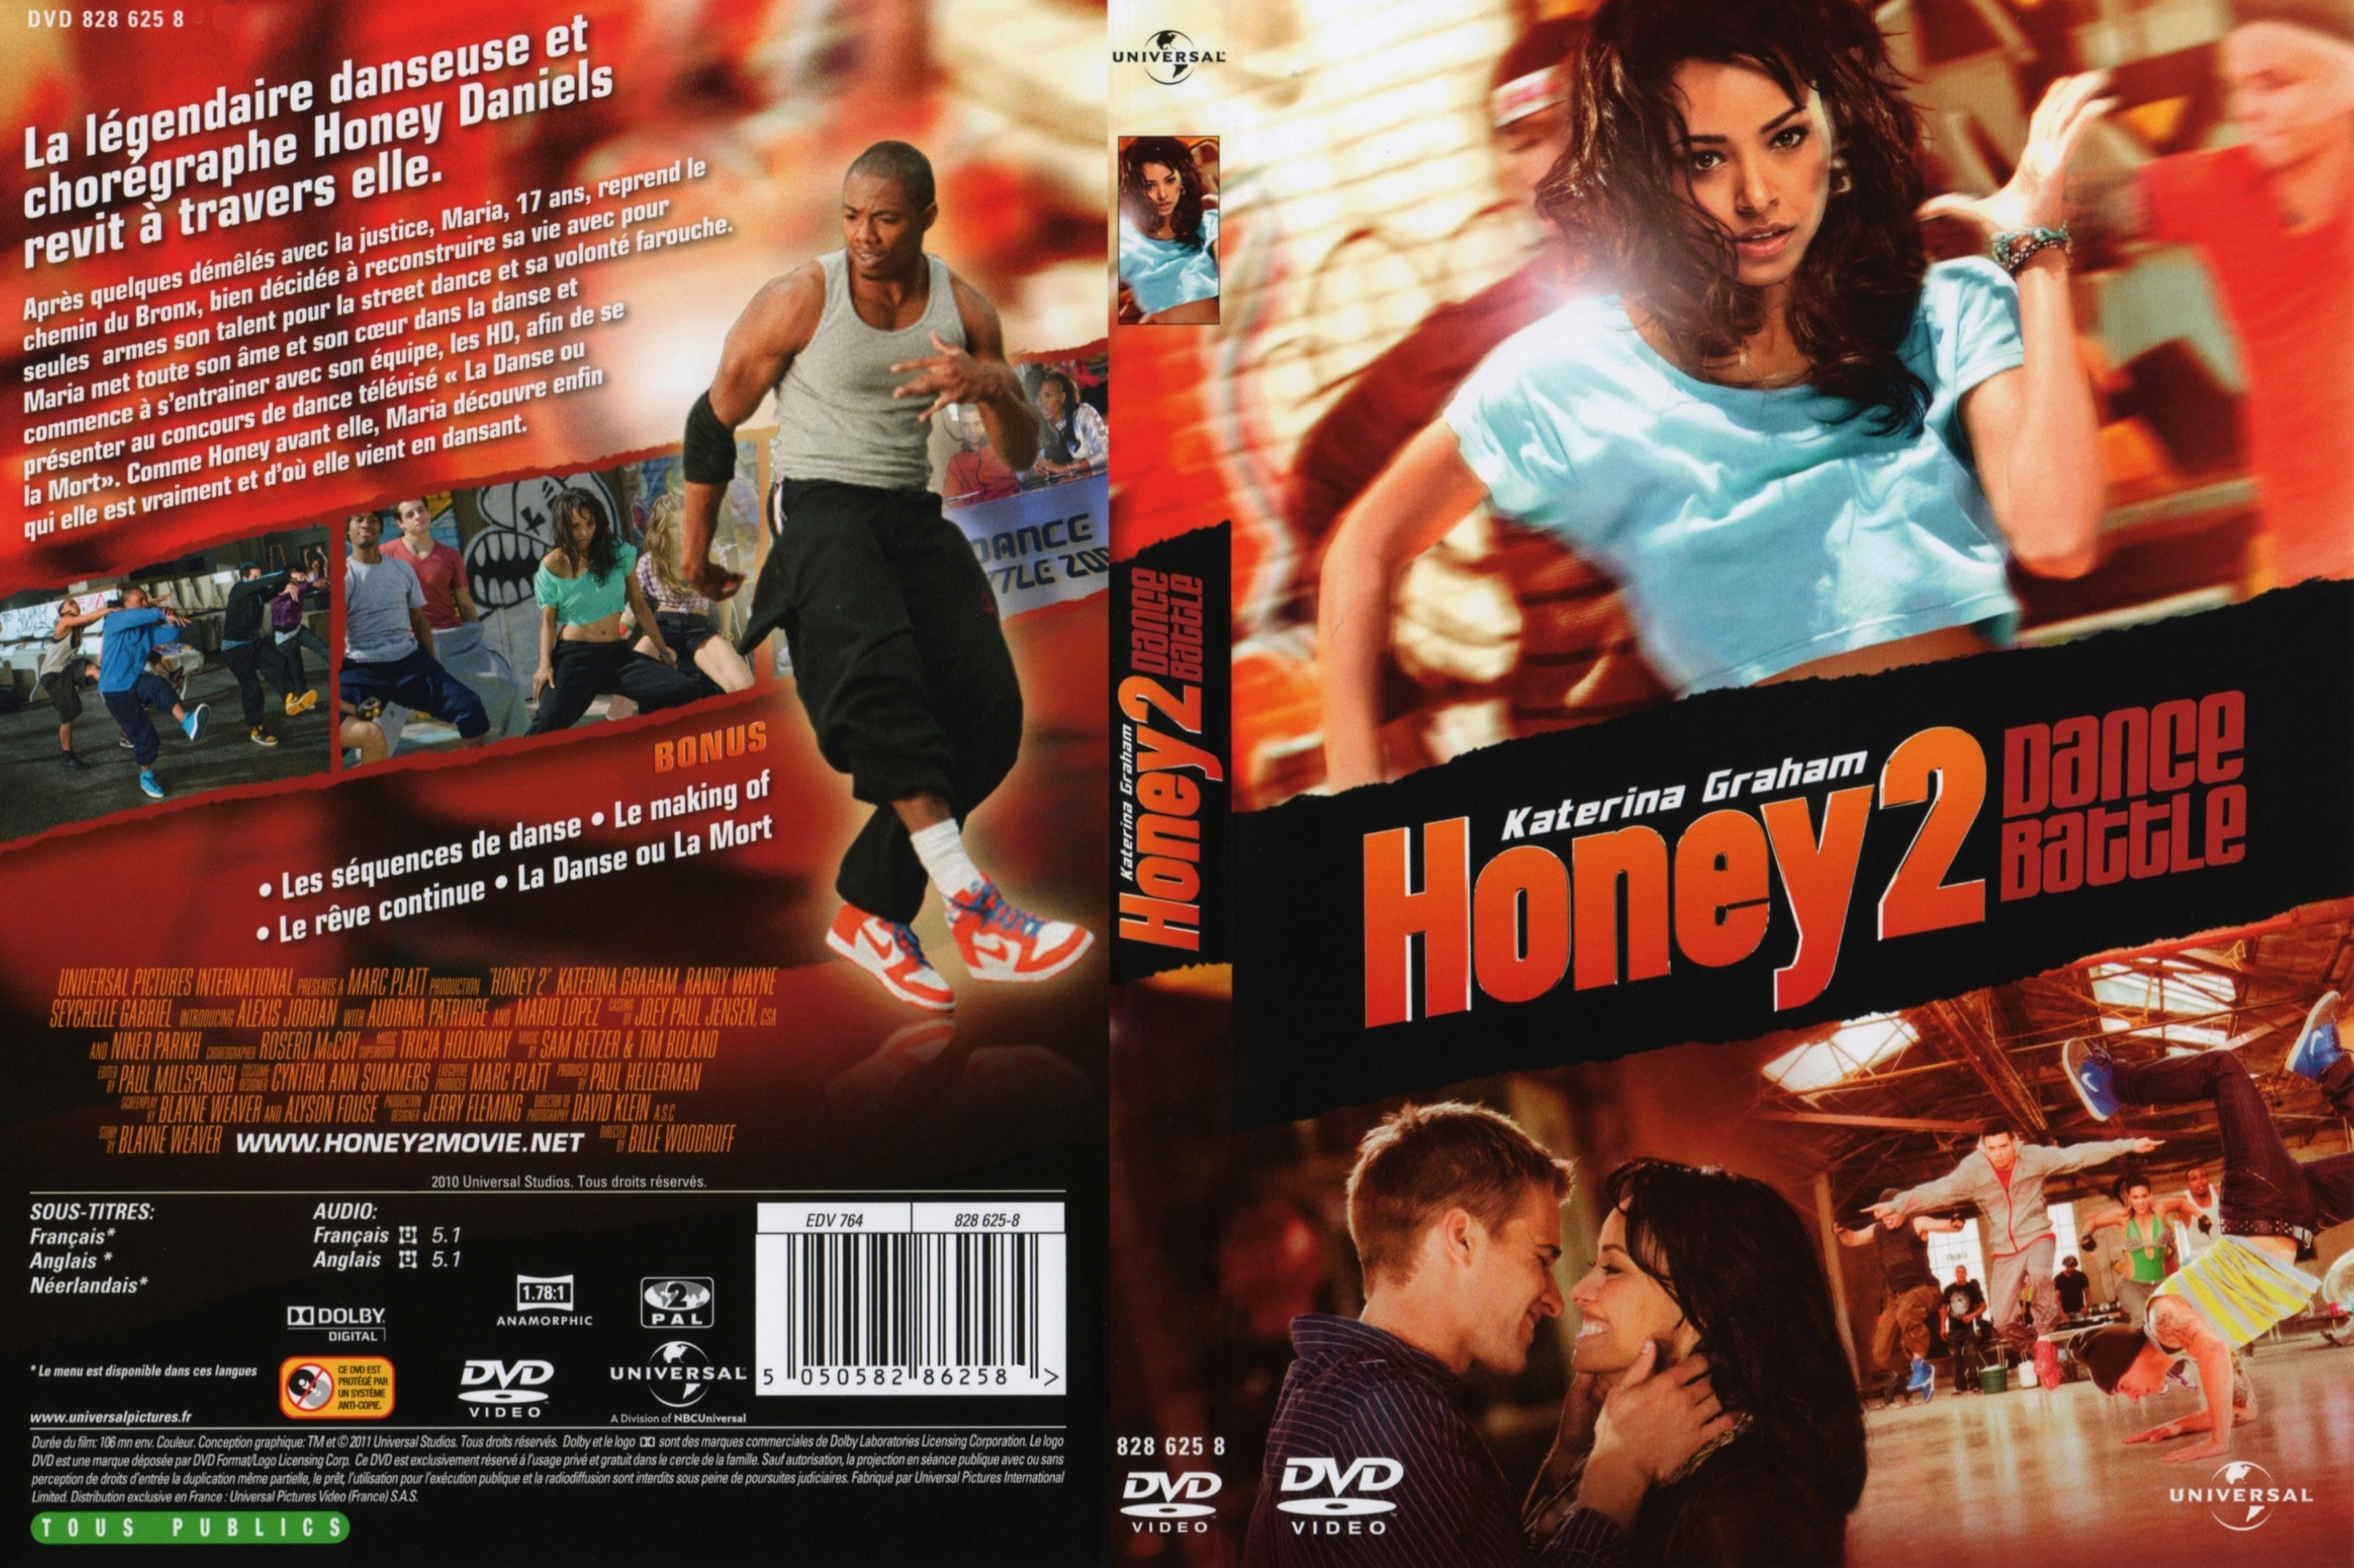 Jaquette DVD Honey 2